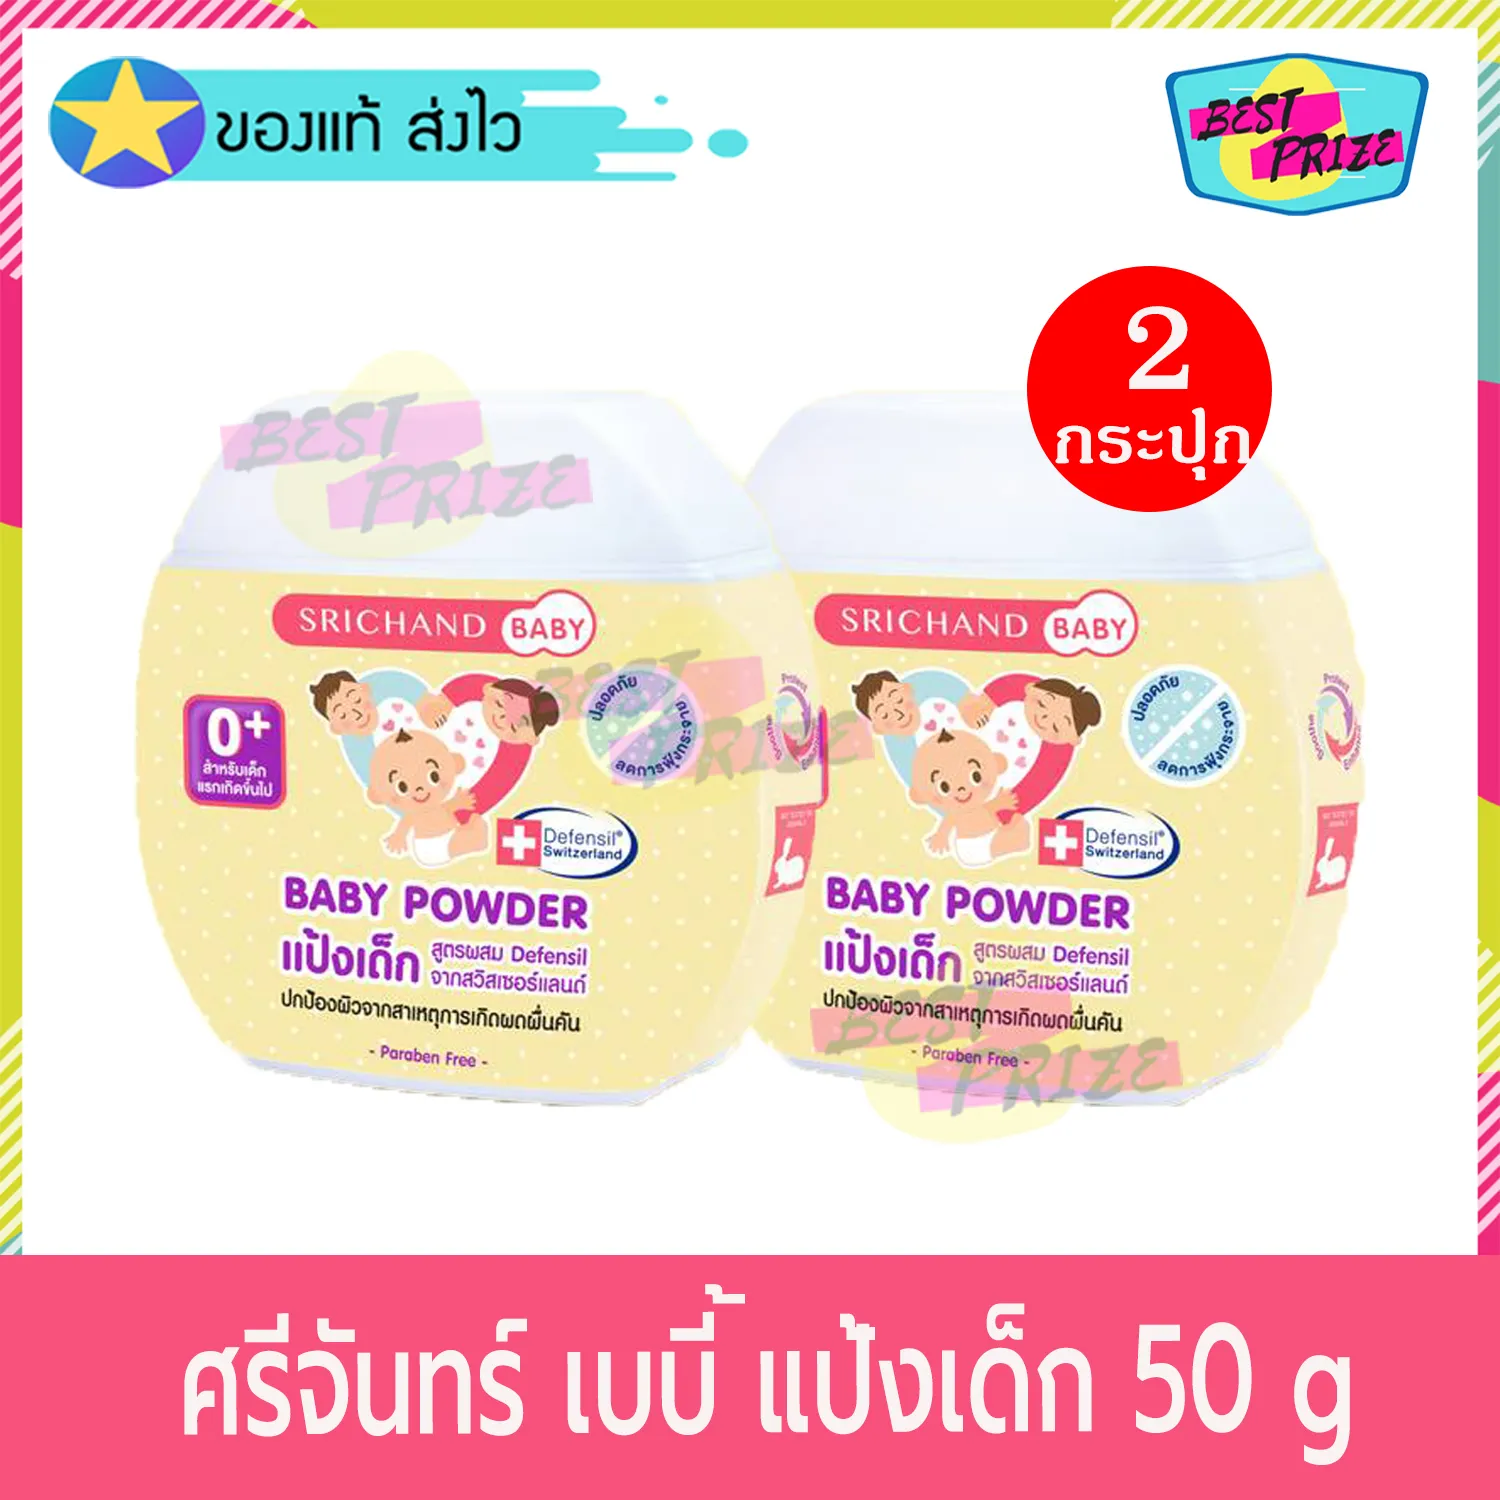 Srichand Baby Powder 50 g (จำนวน 2 กระปุก) ศรีจันทร์เบบี้ พาวเดอร์ 50 กรัม แป้งเด็ก แป้งฝุ่น โรยตัว สำหรับ เด็ก